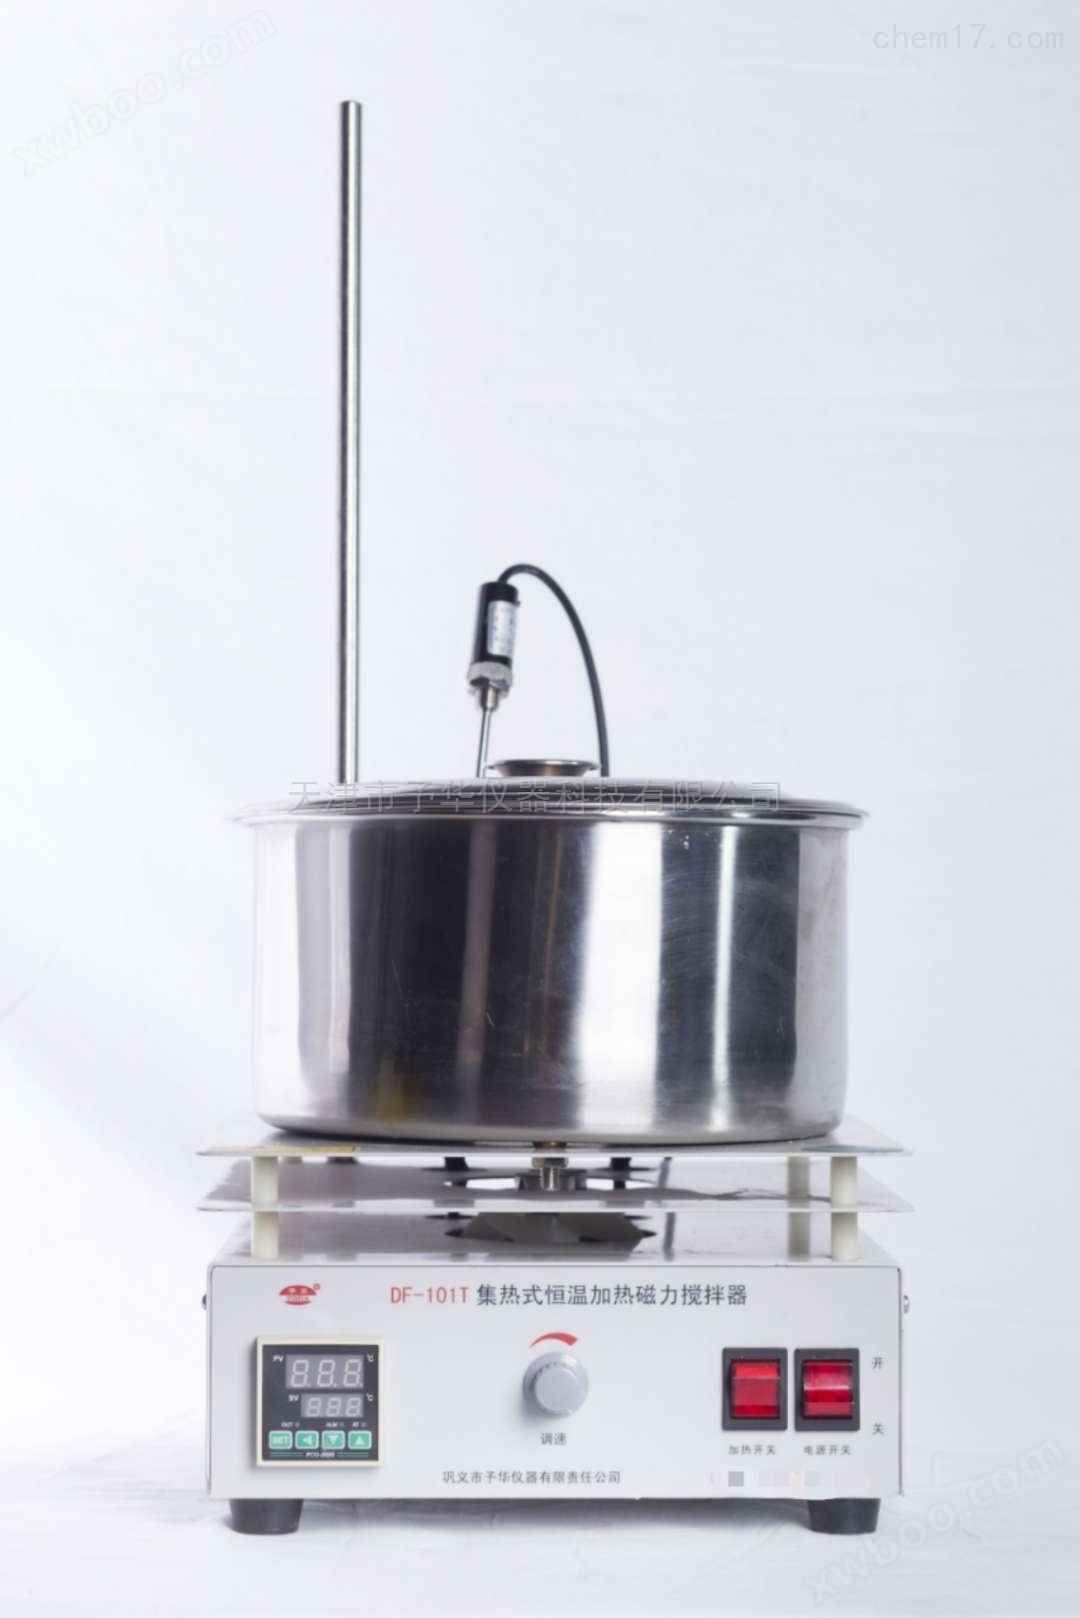 DF-101T系列集热式恒温加热磁力搅拌器